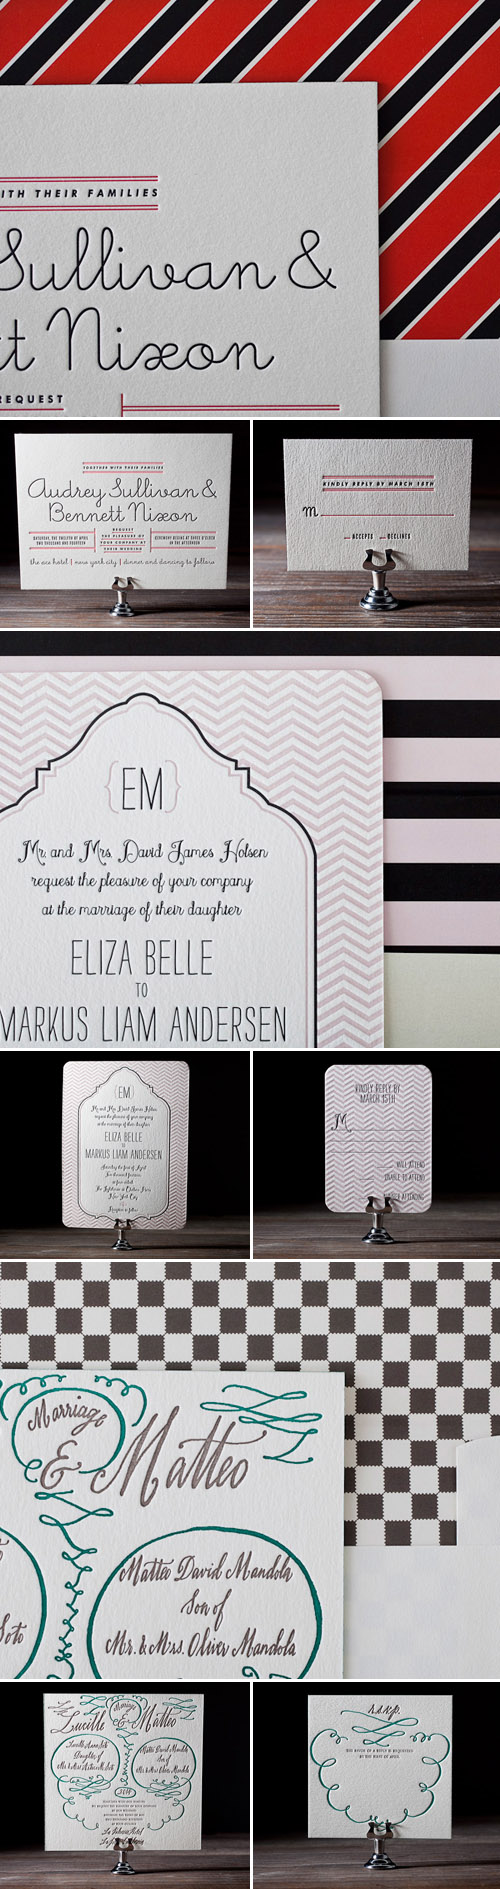 2012 letterpress wedding invitations from Bella Figura